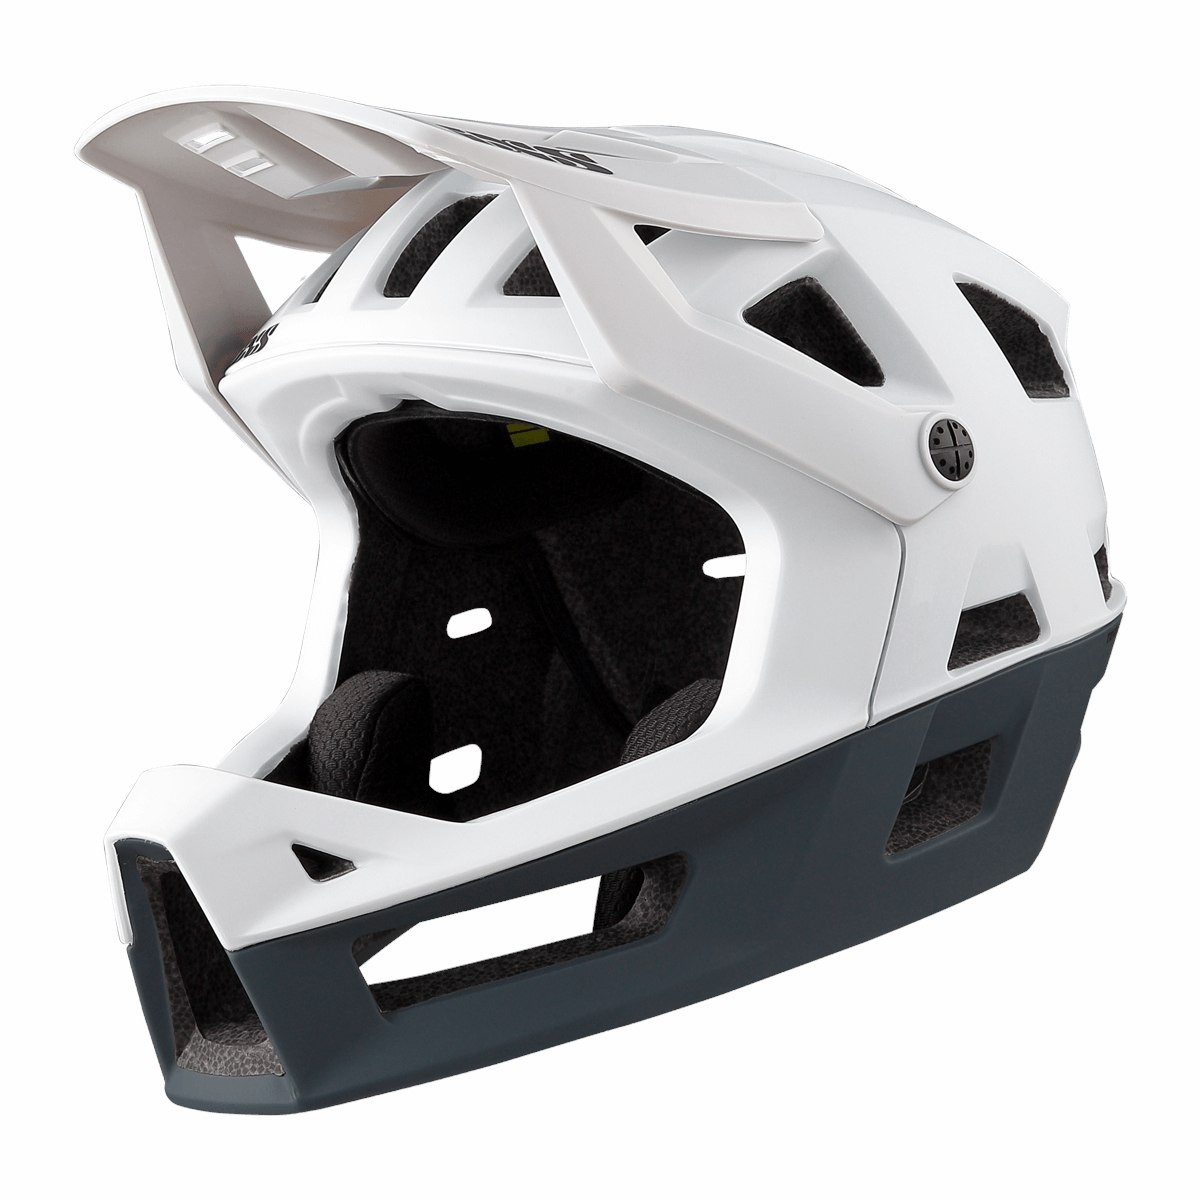 Foto van iXS Trigger Fullface Helm - white